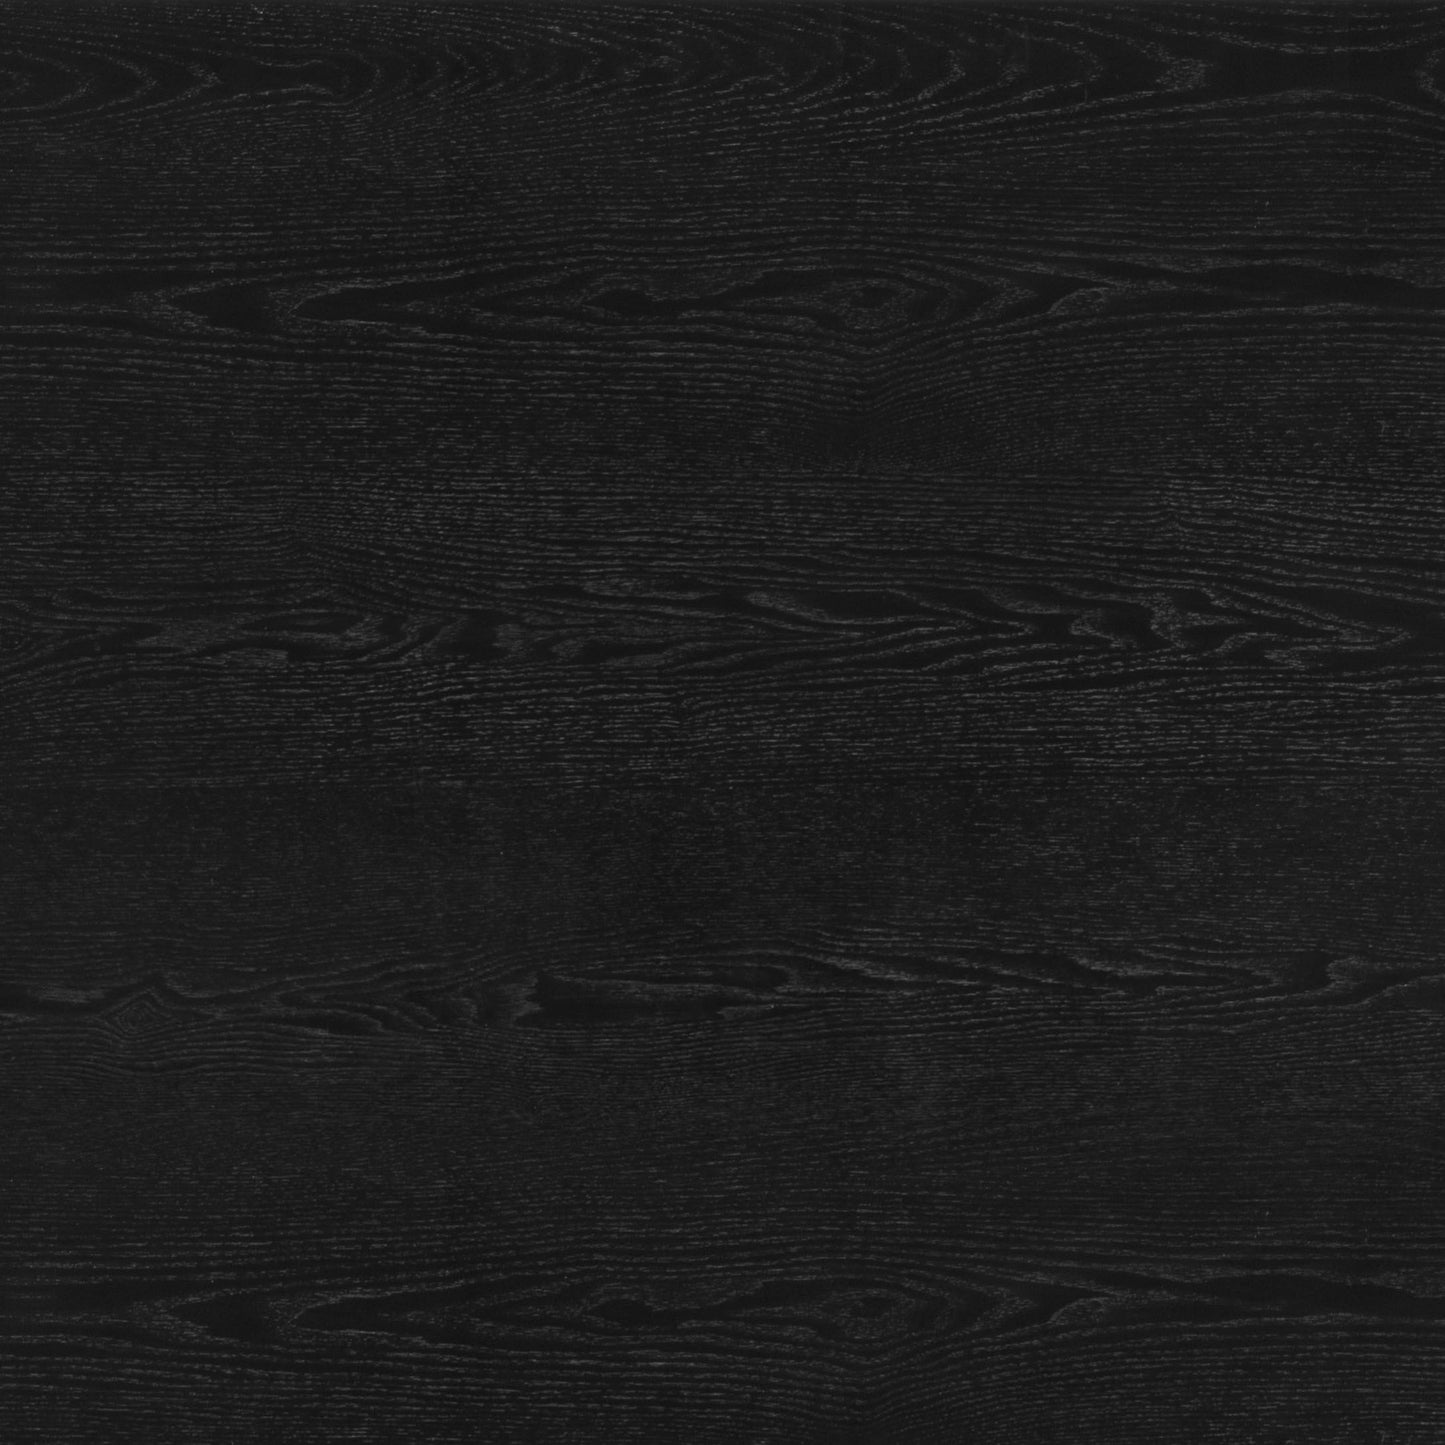 Zoroastria Desk Black